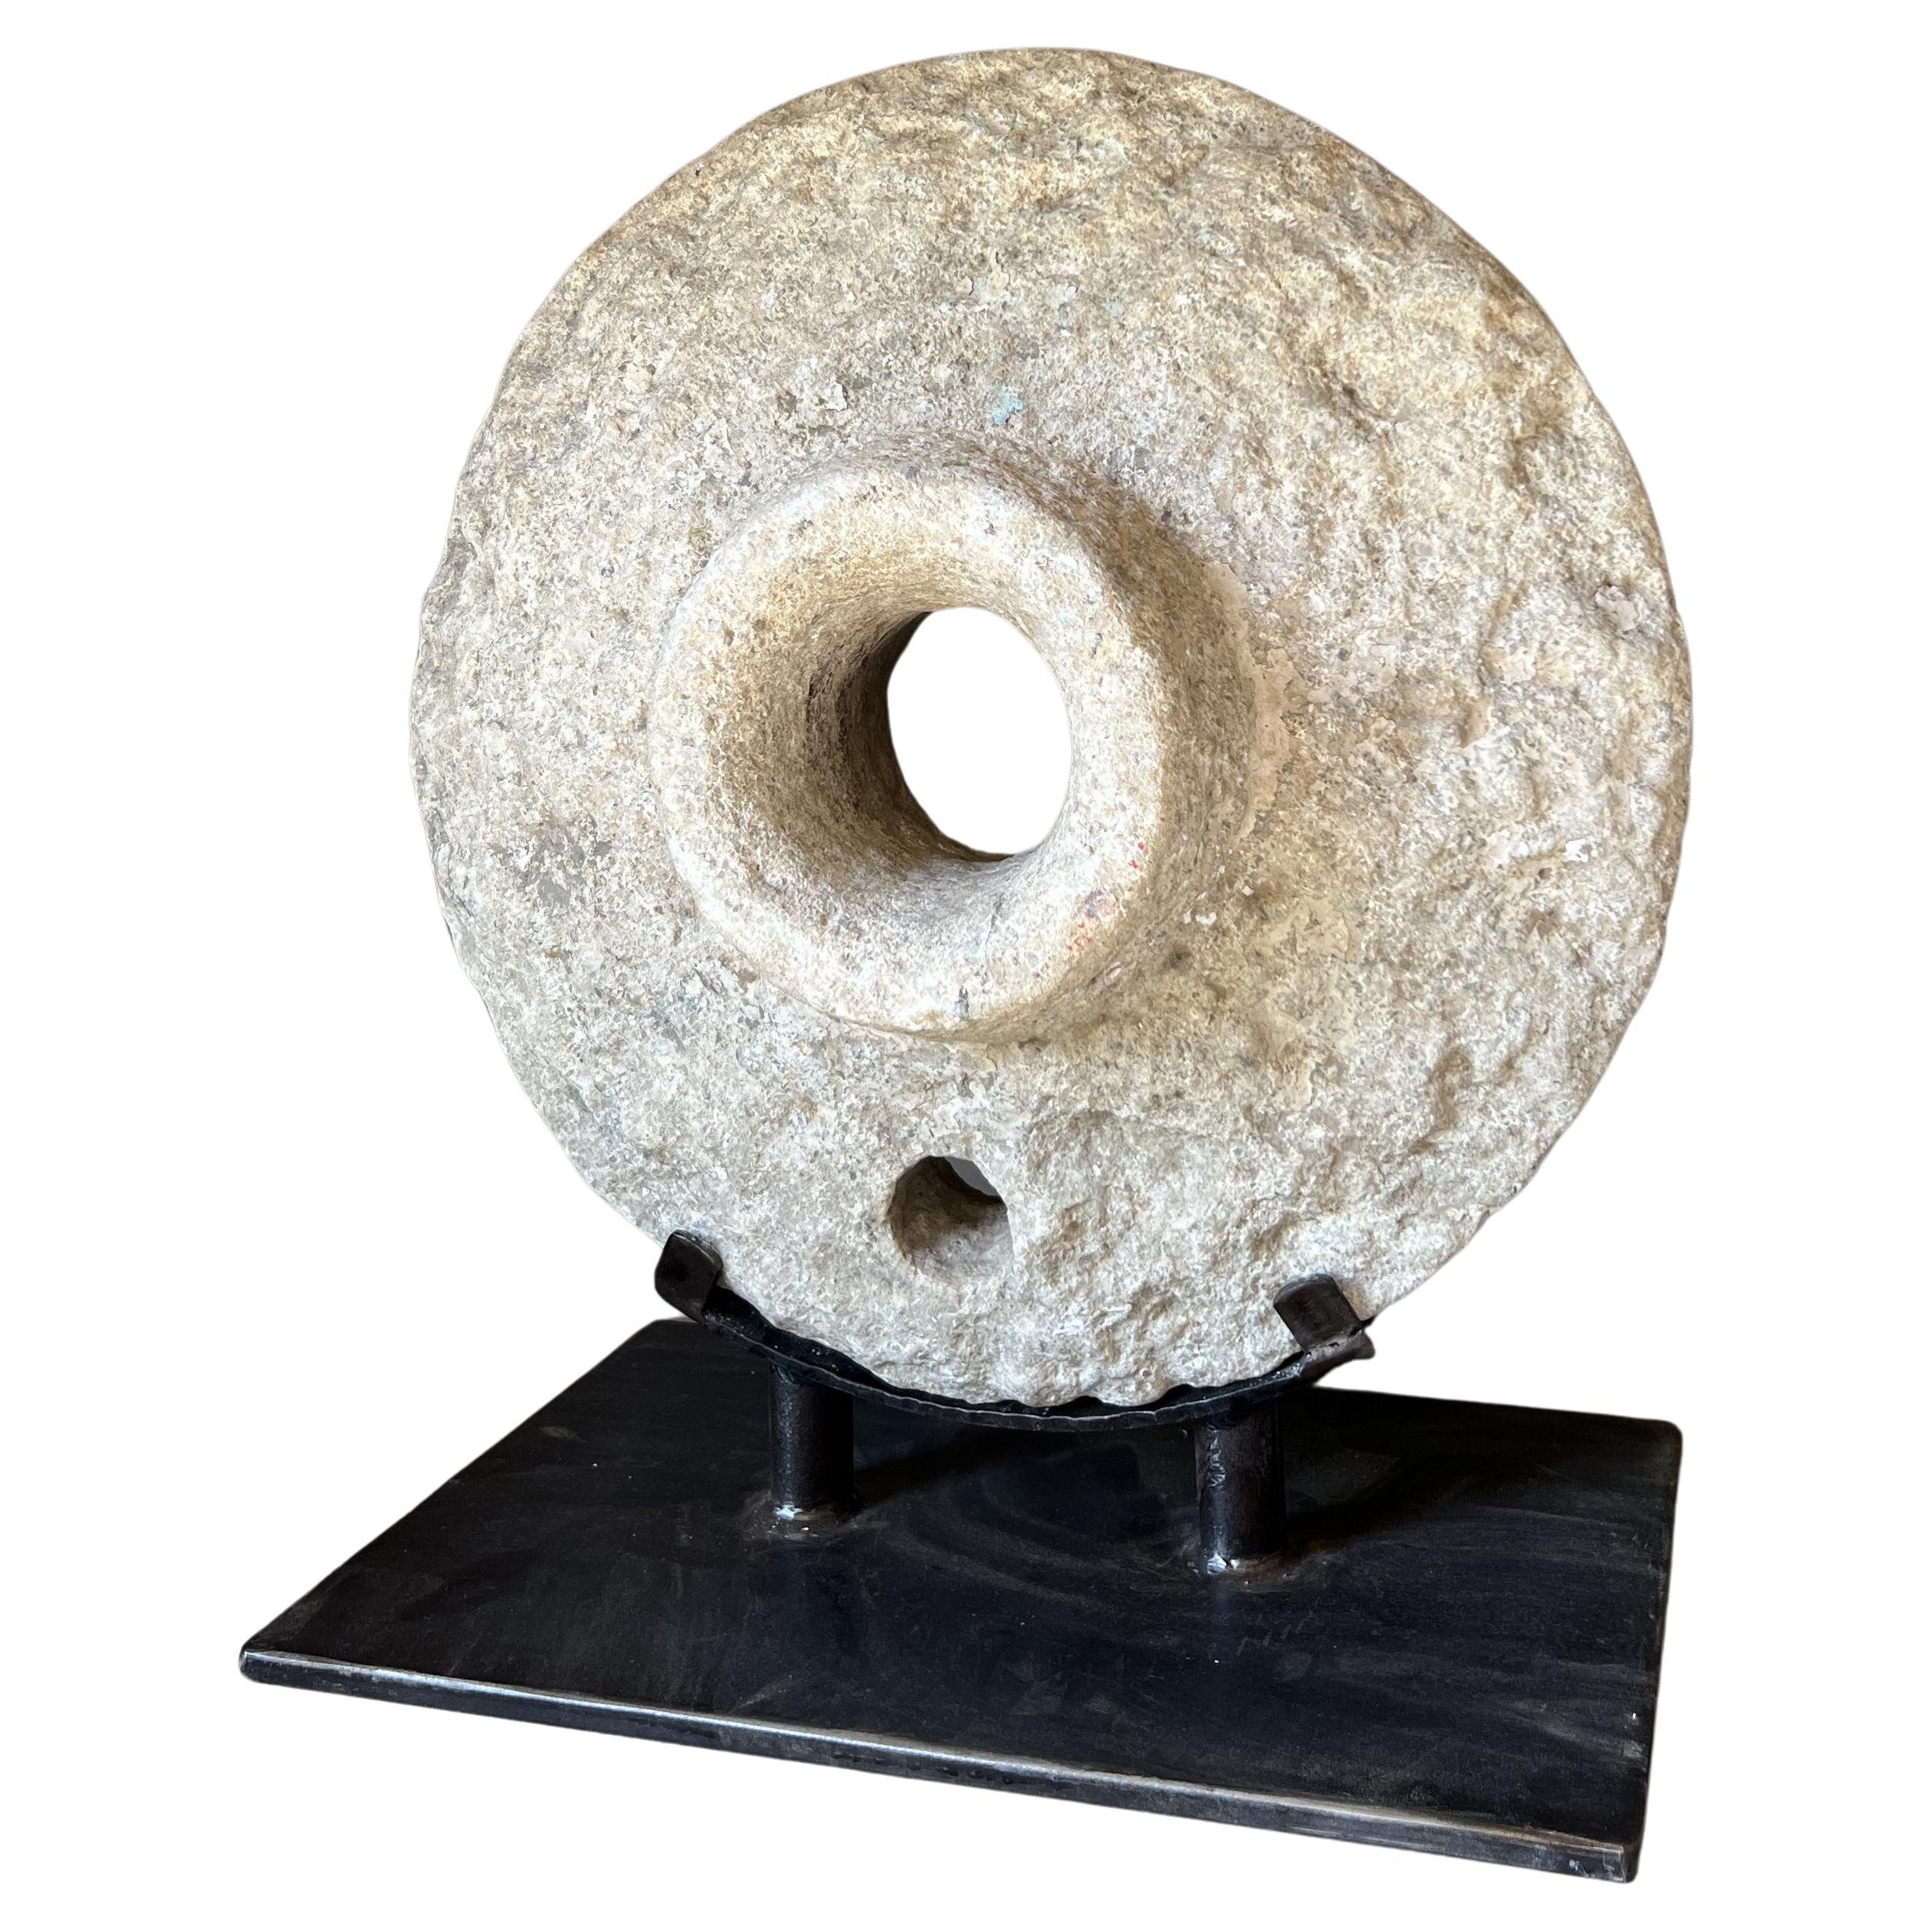 Stone circular object primitif For Sale